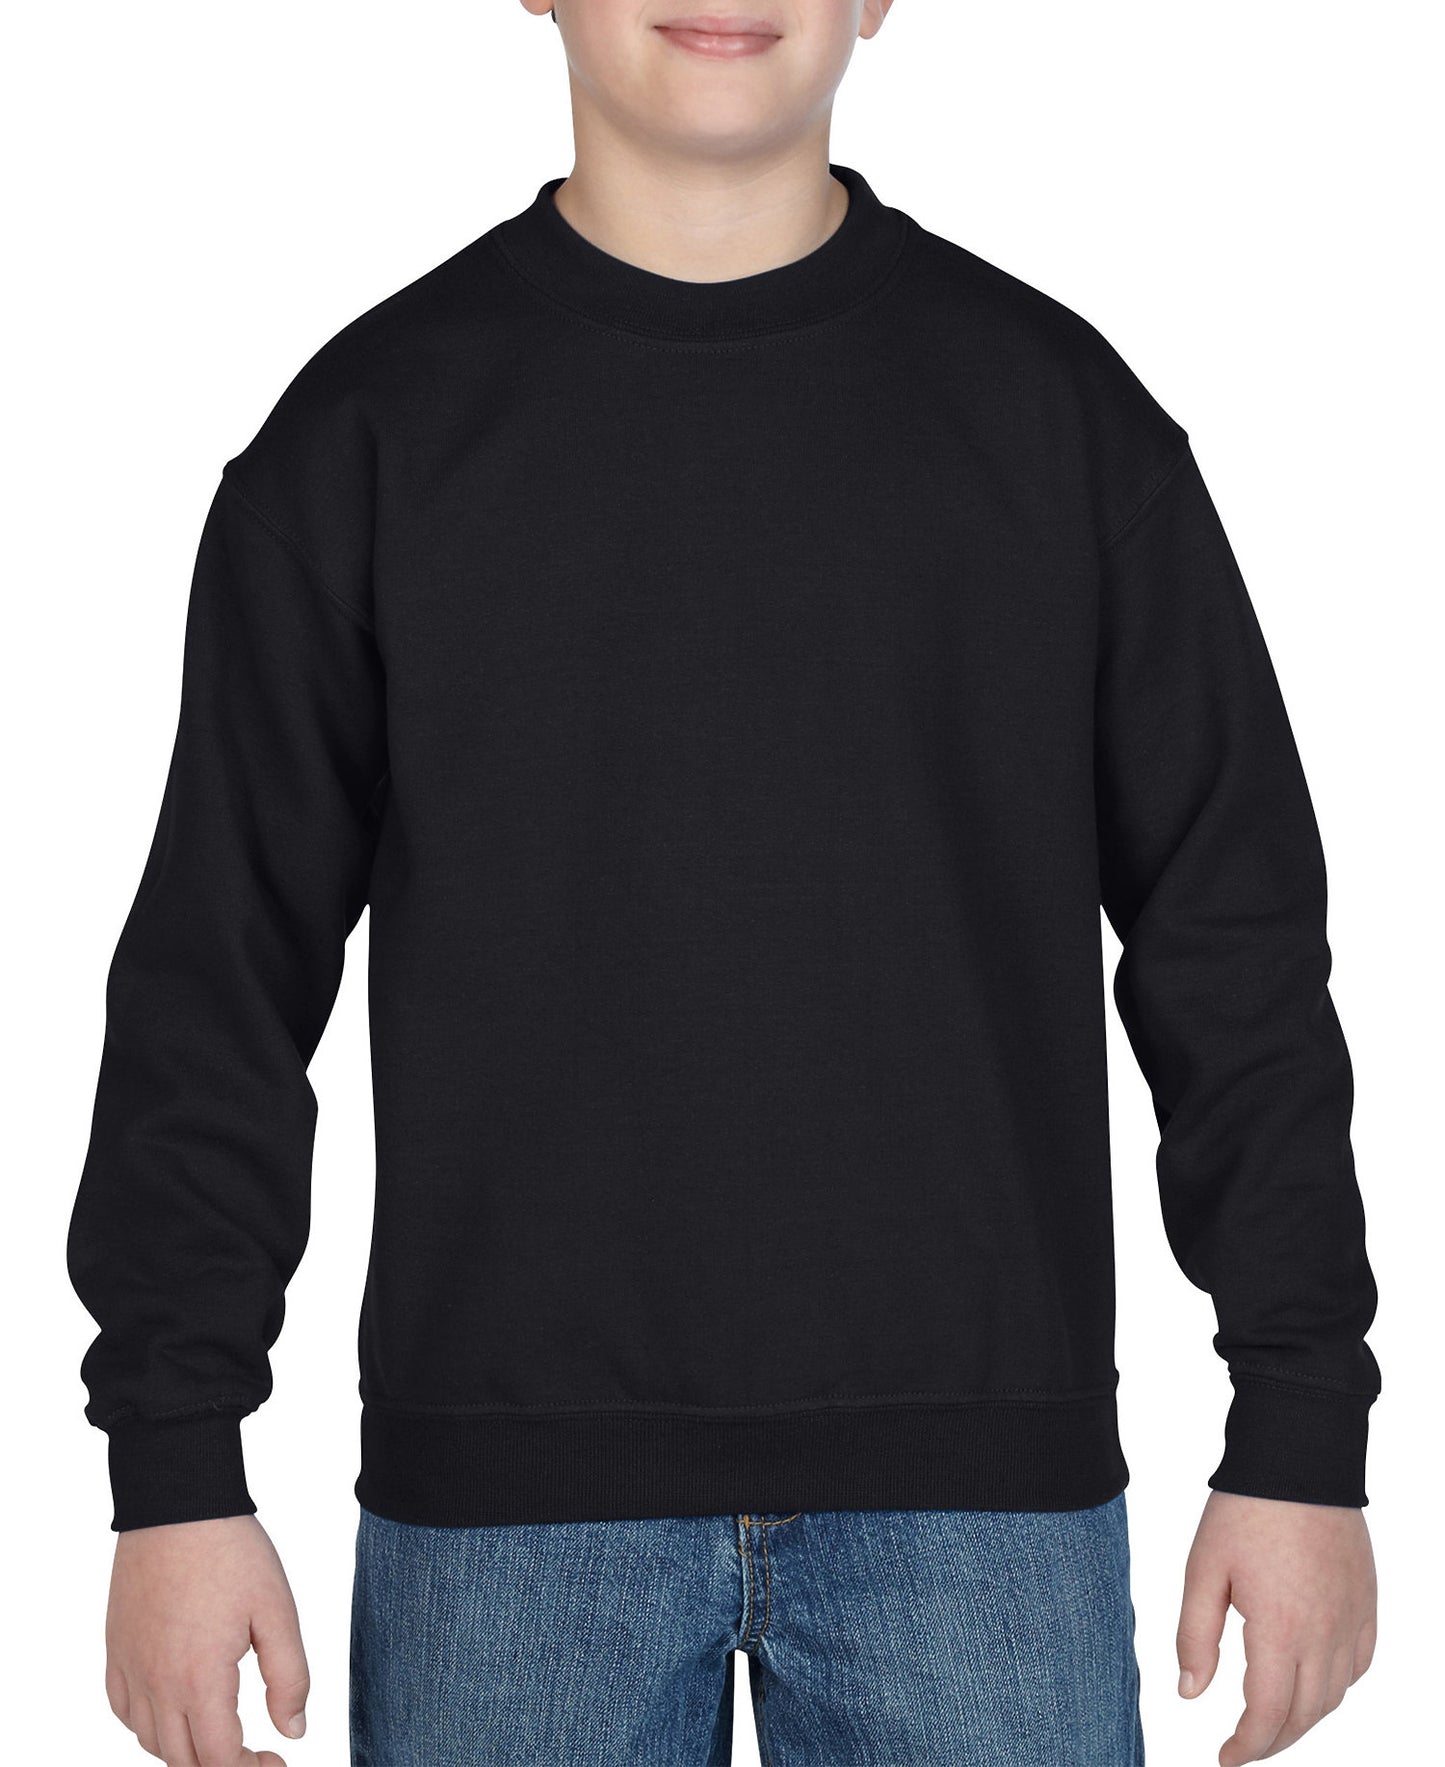 Gildan Youth Sweatshirt - Black